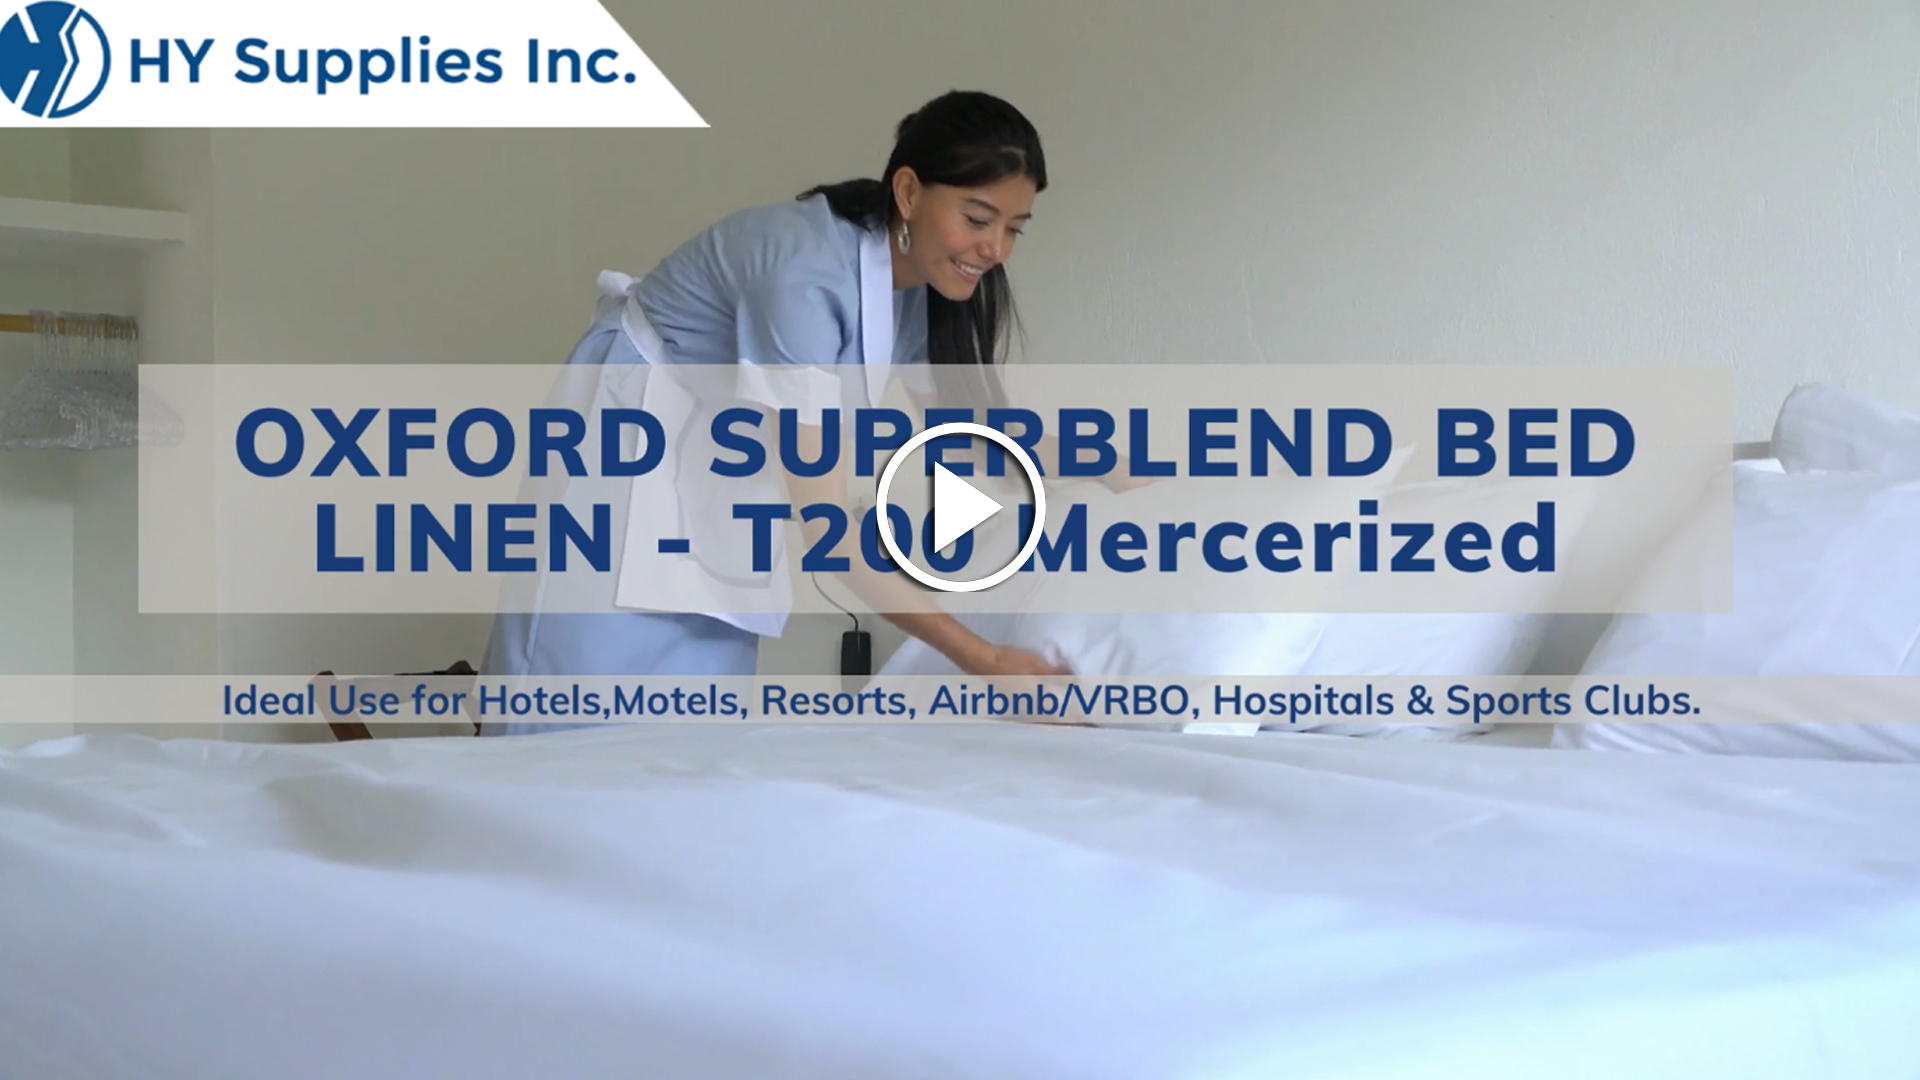 OXFORD SUPER BLEND BED LINEN - T200 Mercerized